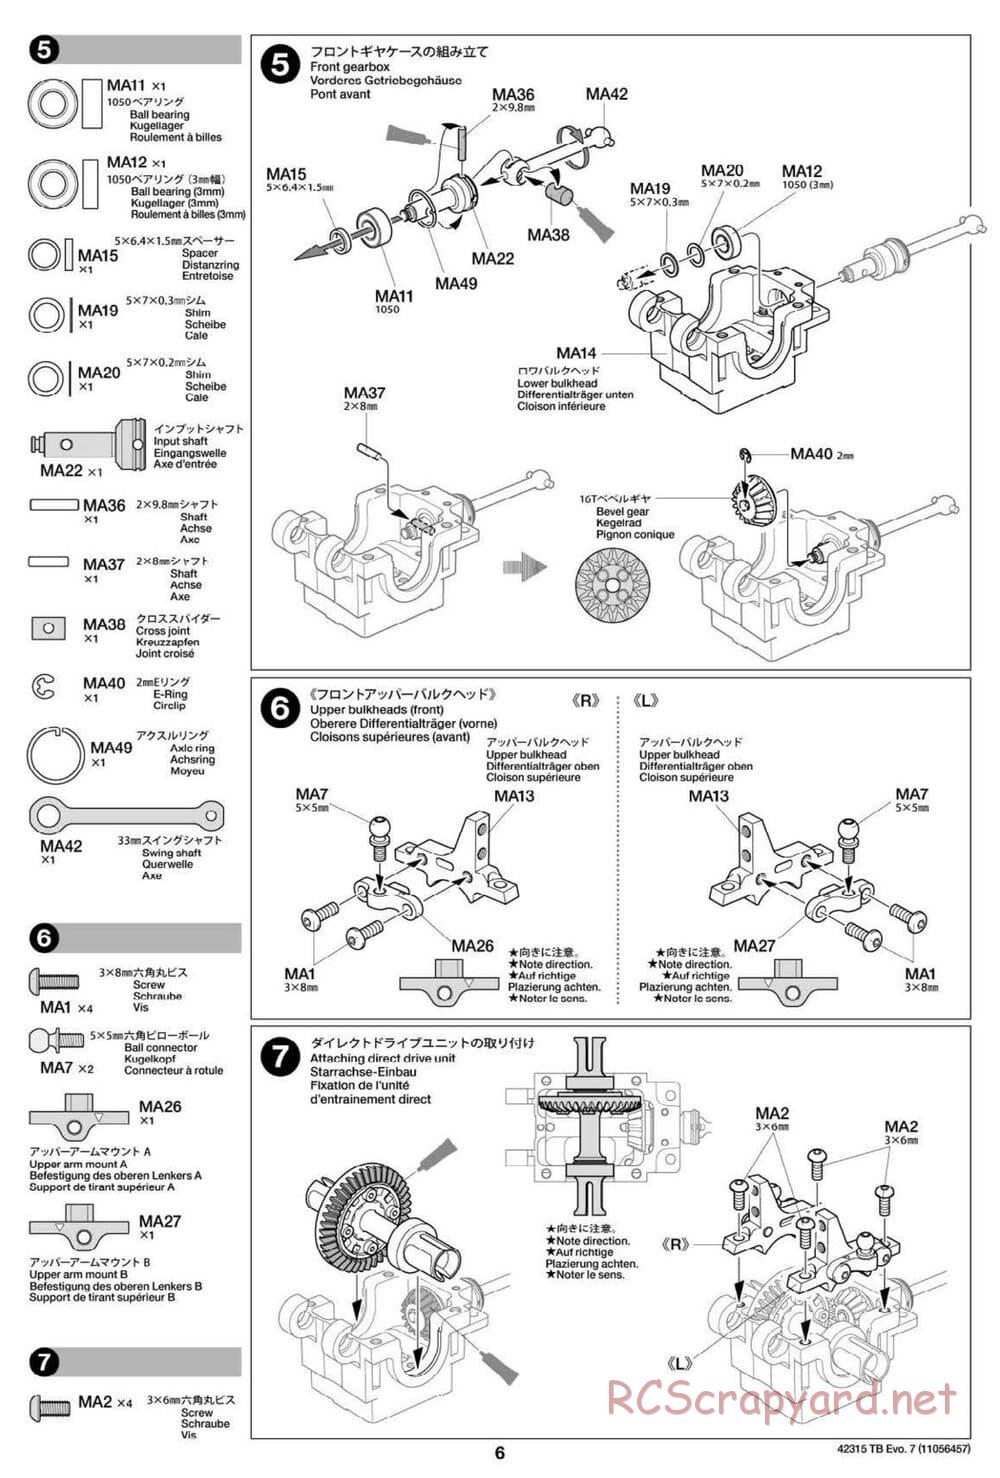 Tamiya - TB Evo.7 Chassis - Manual - Page 6